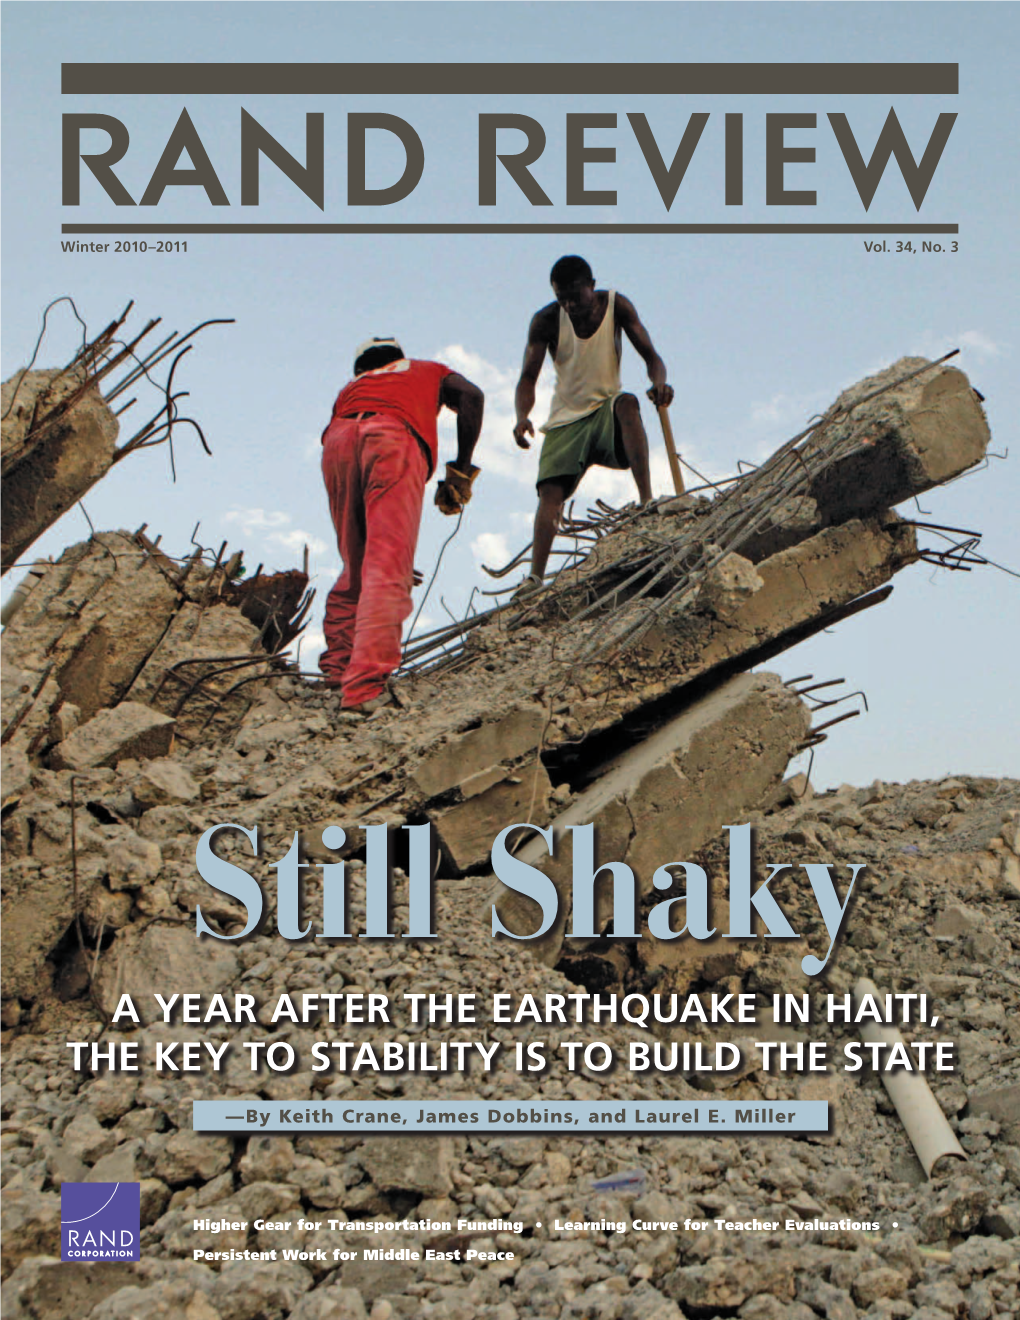 RAND Review, Vol. 34, No. 3, Winter 2010